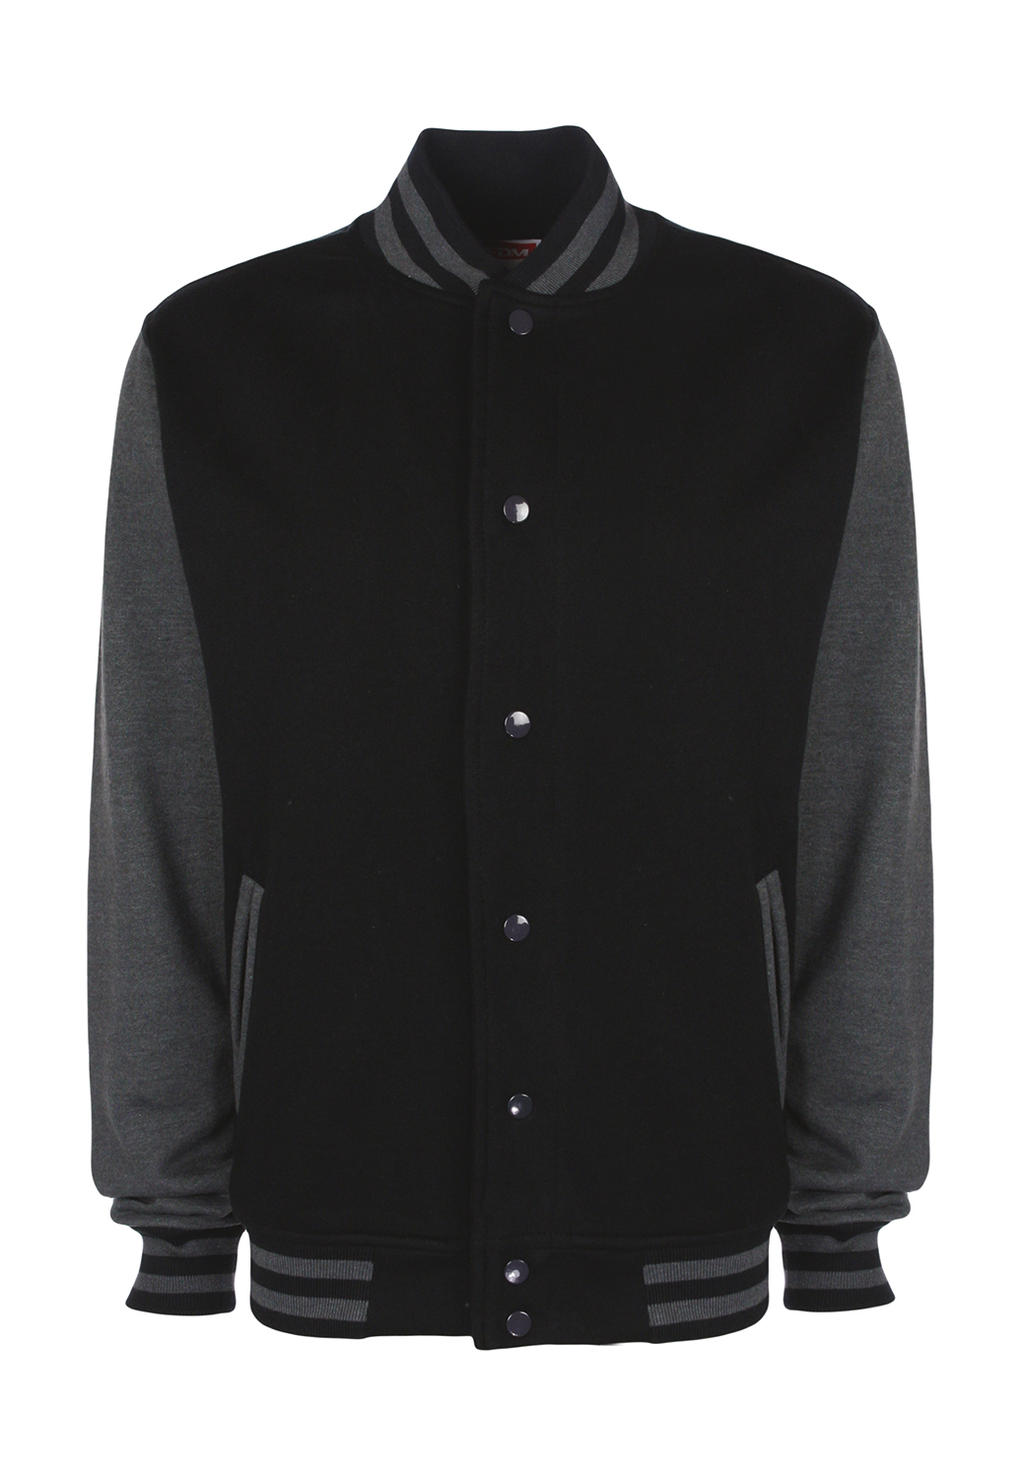  Varsity Jacket in Farbe Black/Charcoal